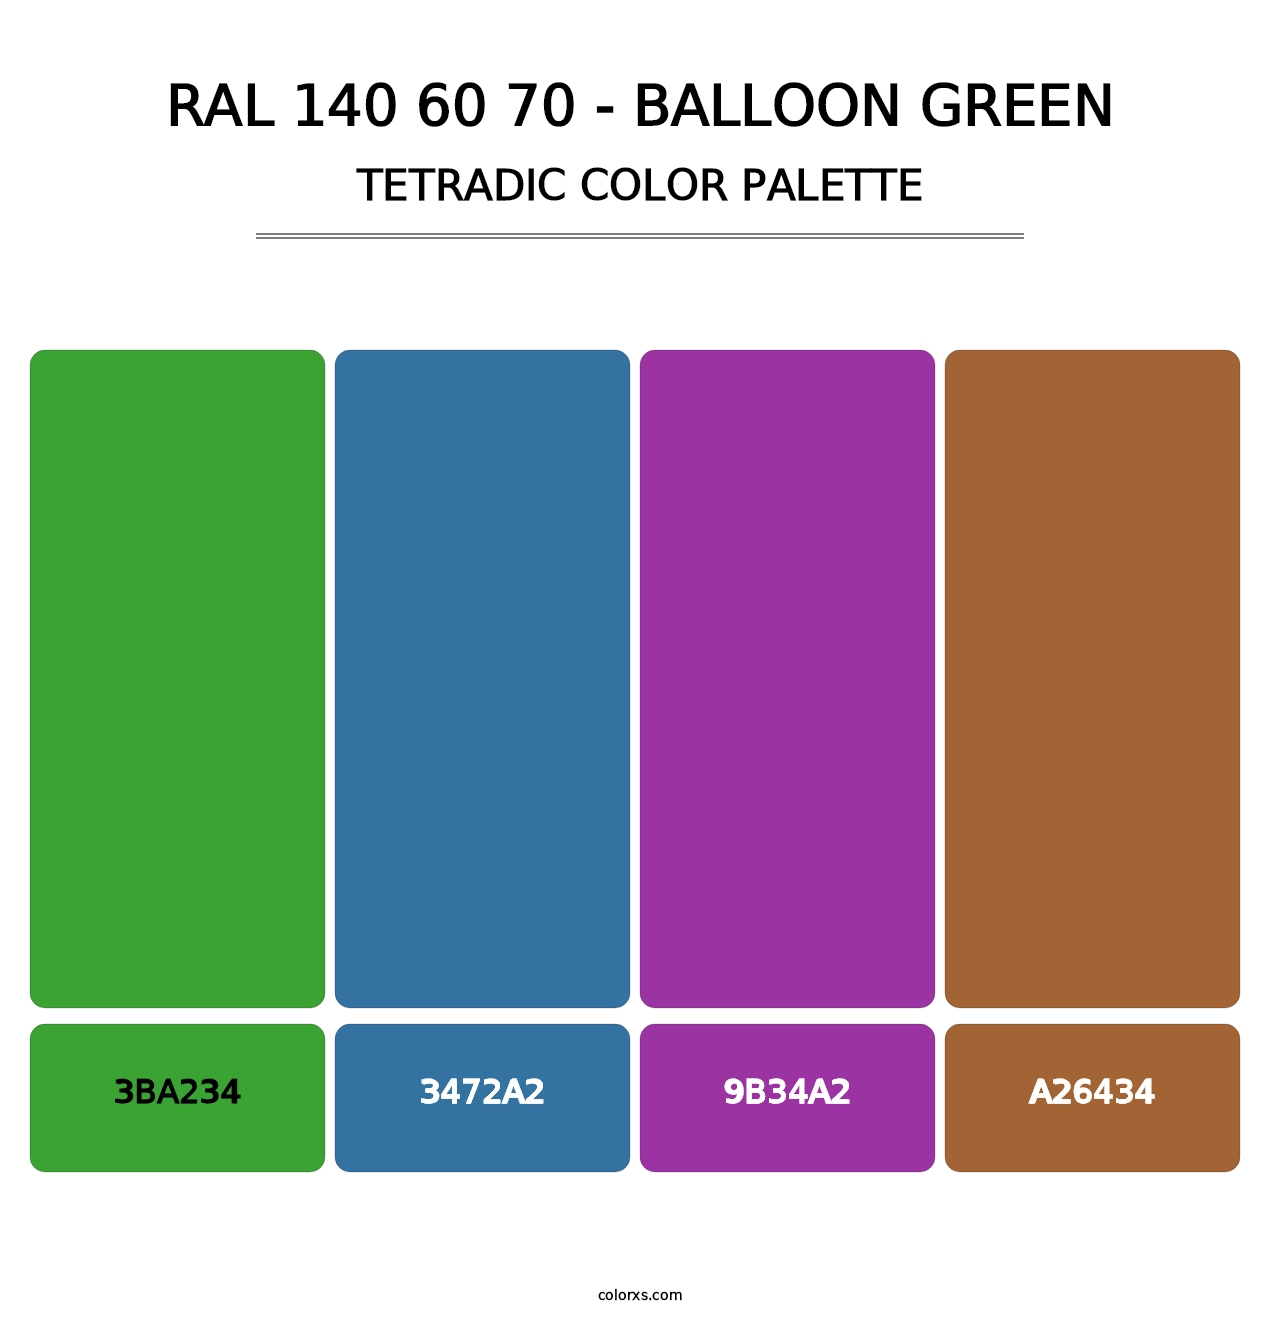 RAL 140 60 70 - Balloon Green - Tetradic Color Palette